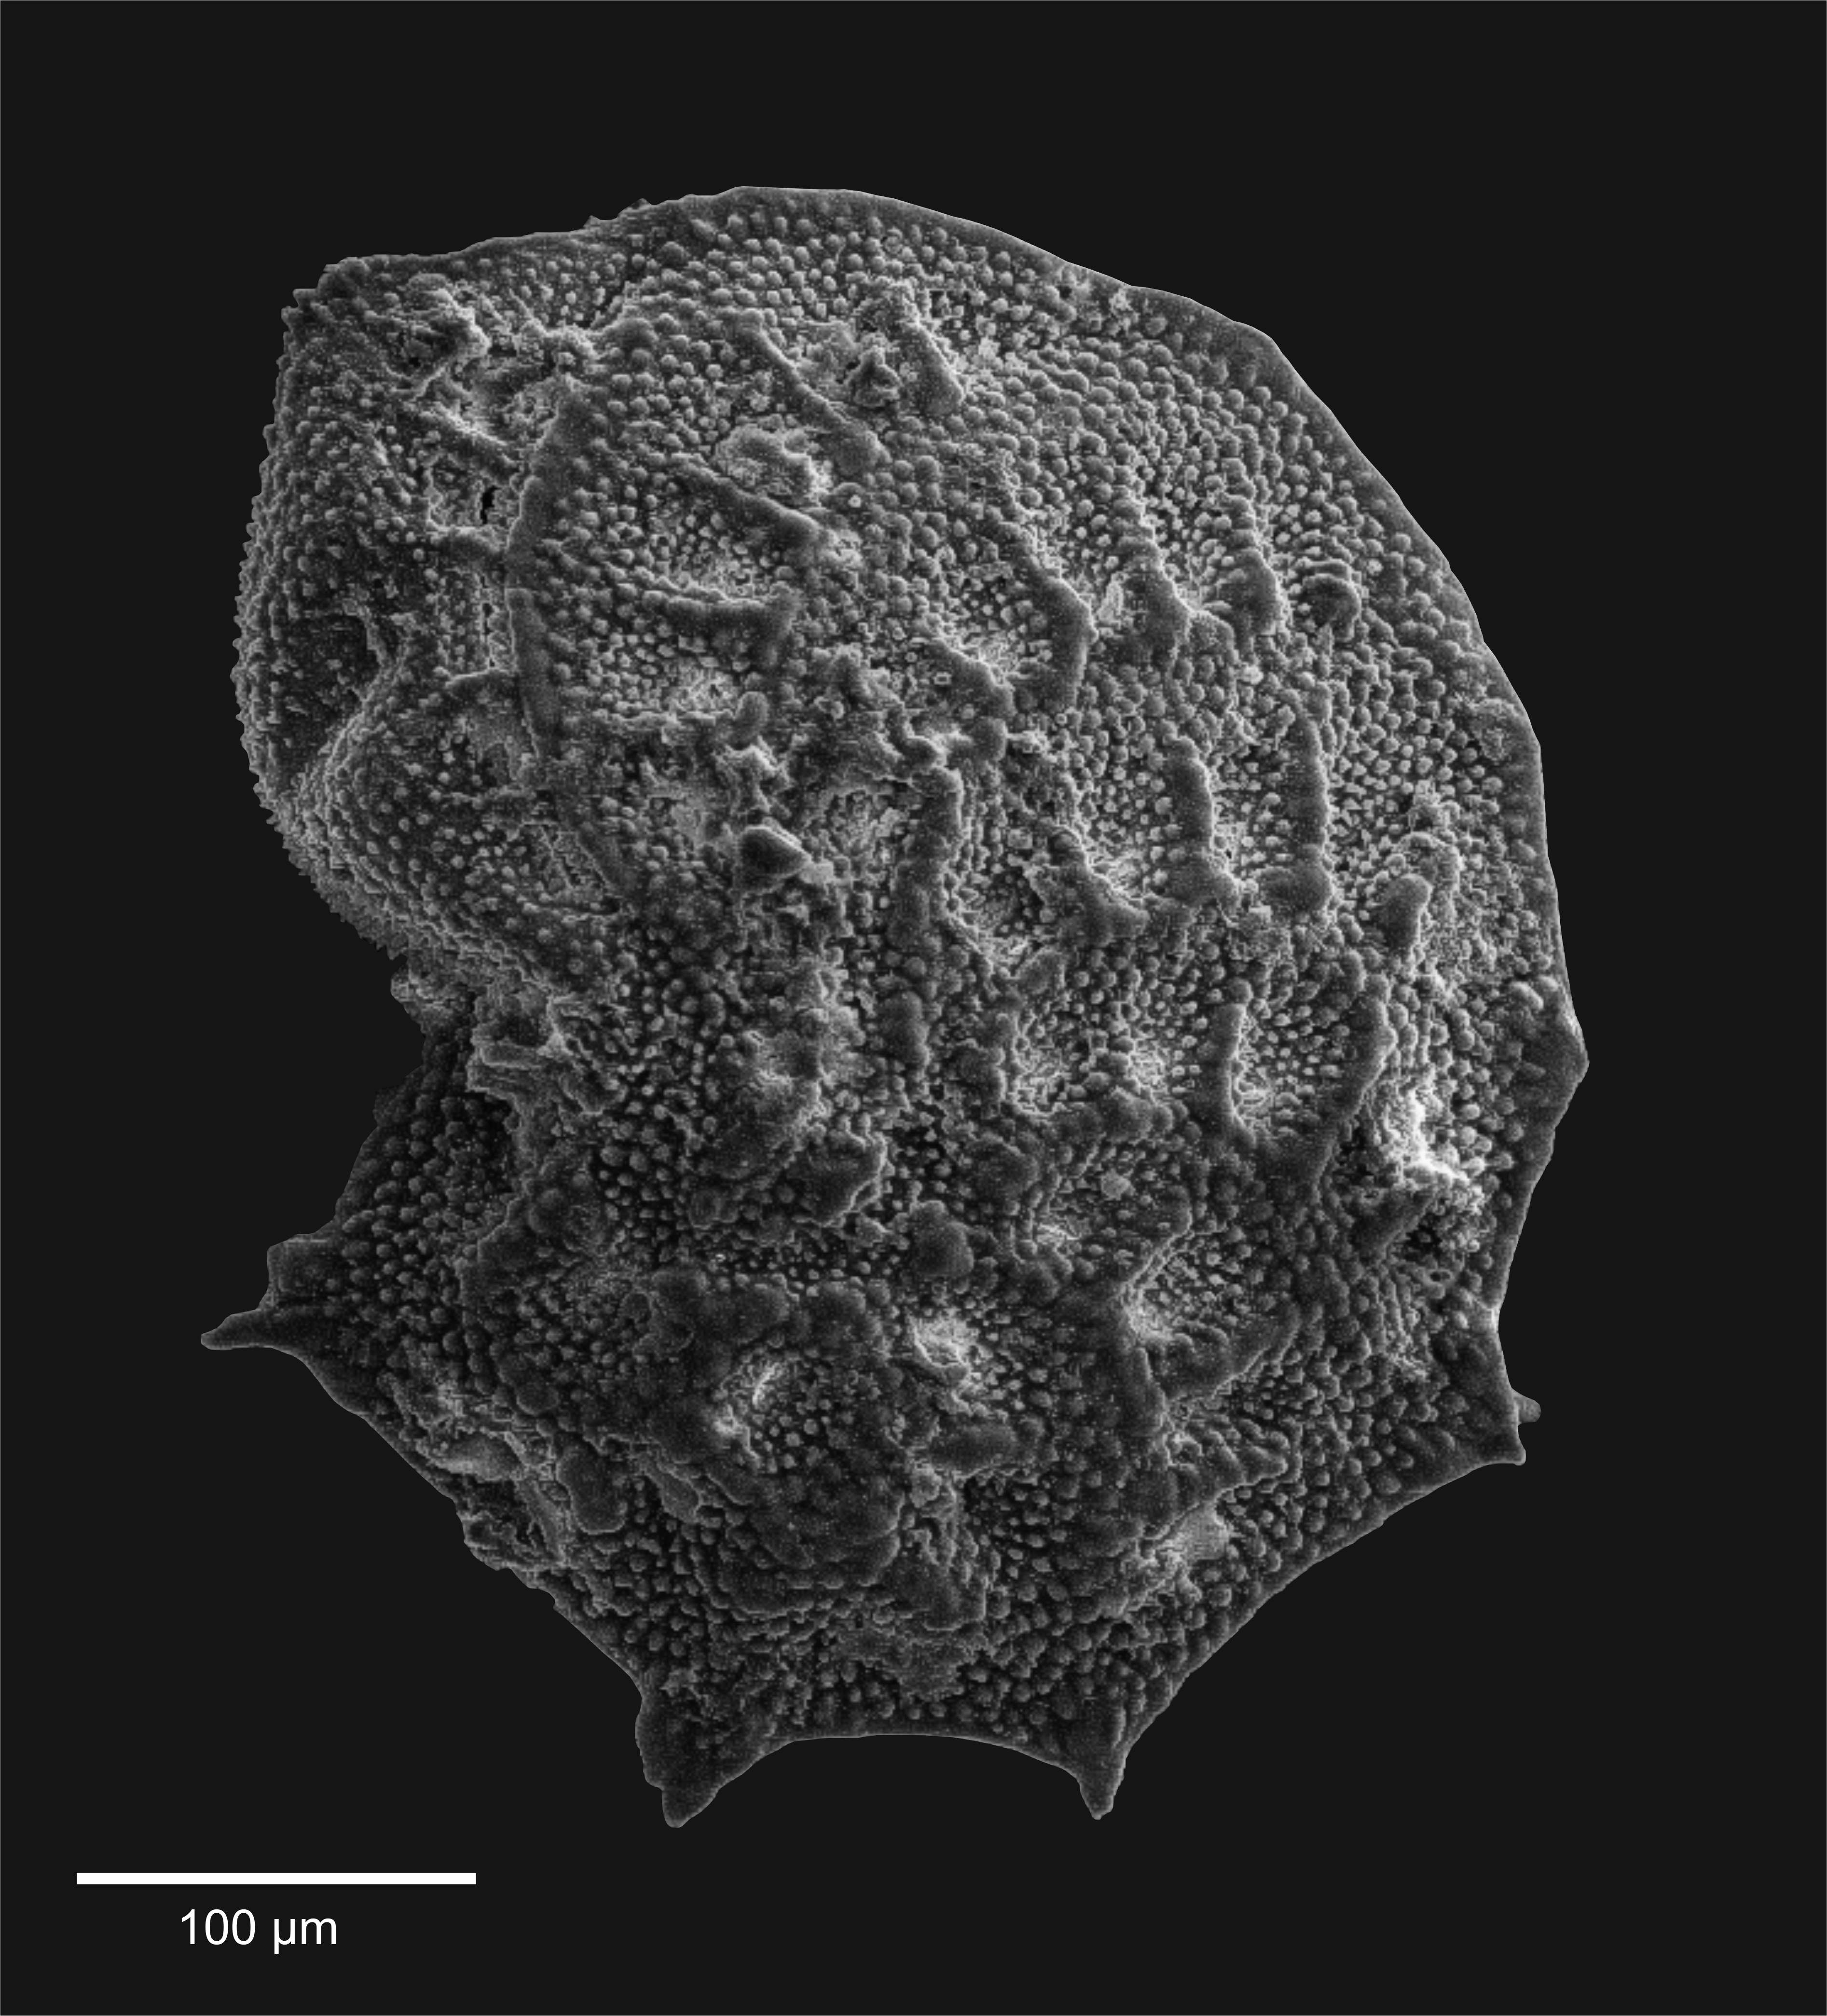 SEM image of benthic foraminifera specimen Elphidium aculeatum from sediment core LK-3 extracted in Lošinj Channel - for more information see the paper Brunović et al. (this Volume)